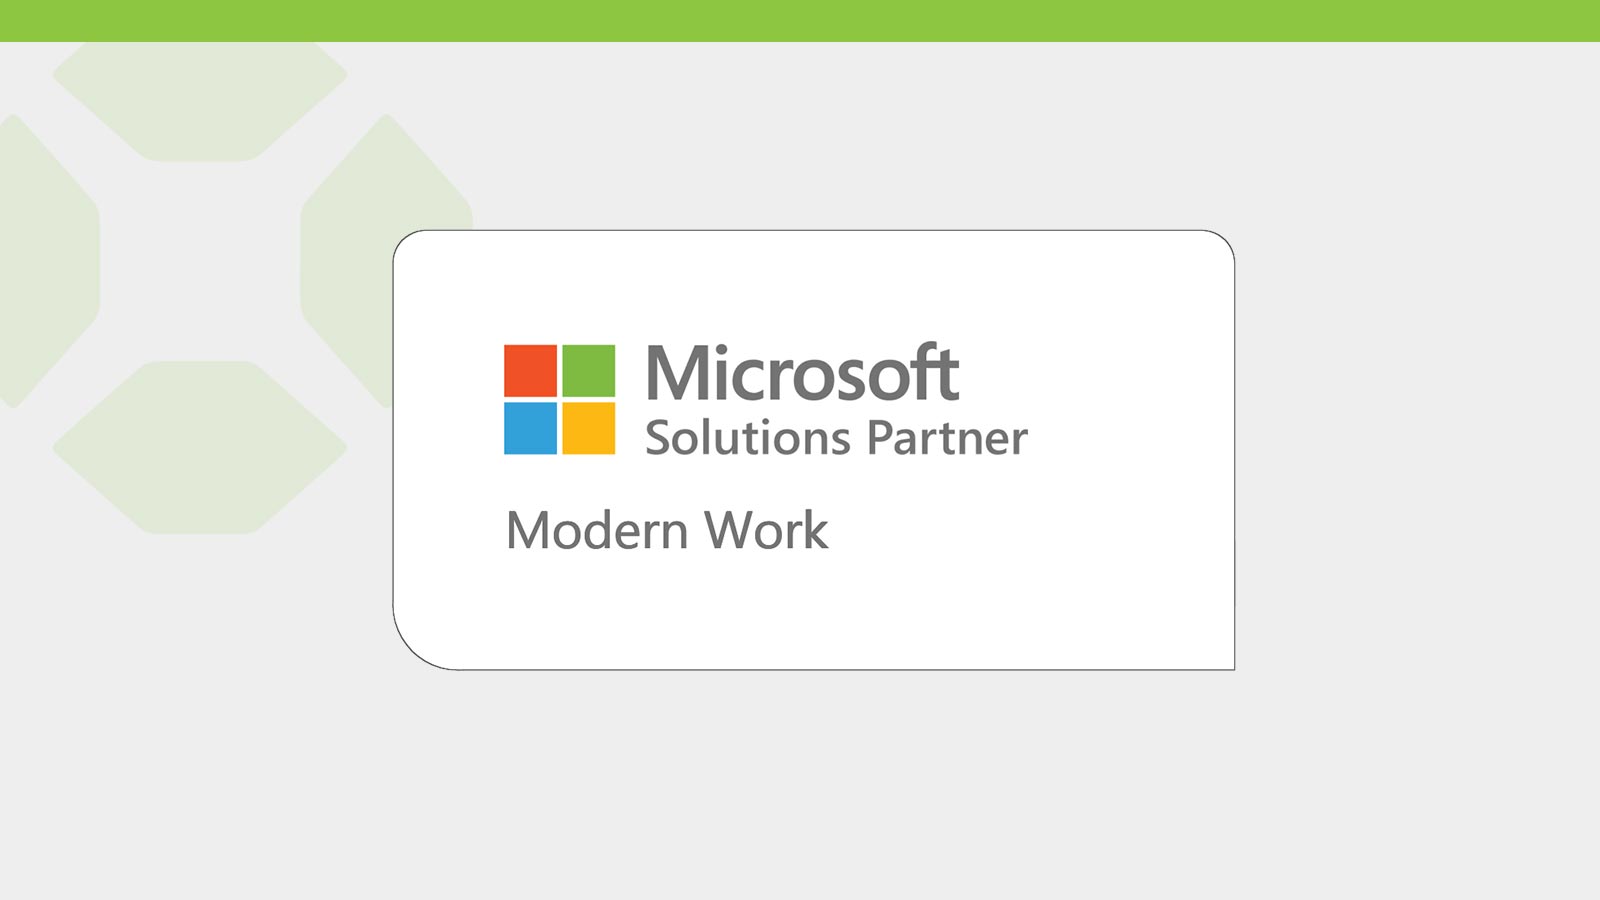 Citrix and Microsoft Partner to Deliver Cloud Solutions - Citrix